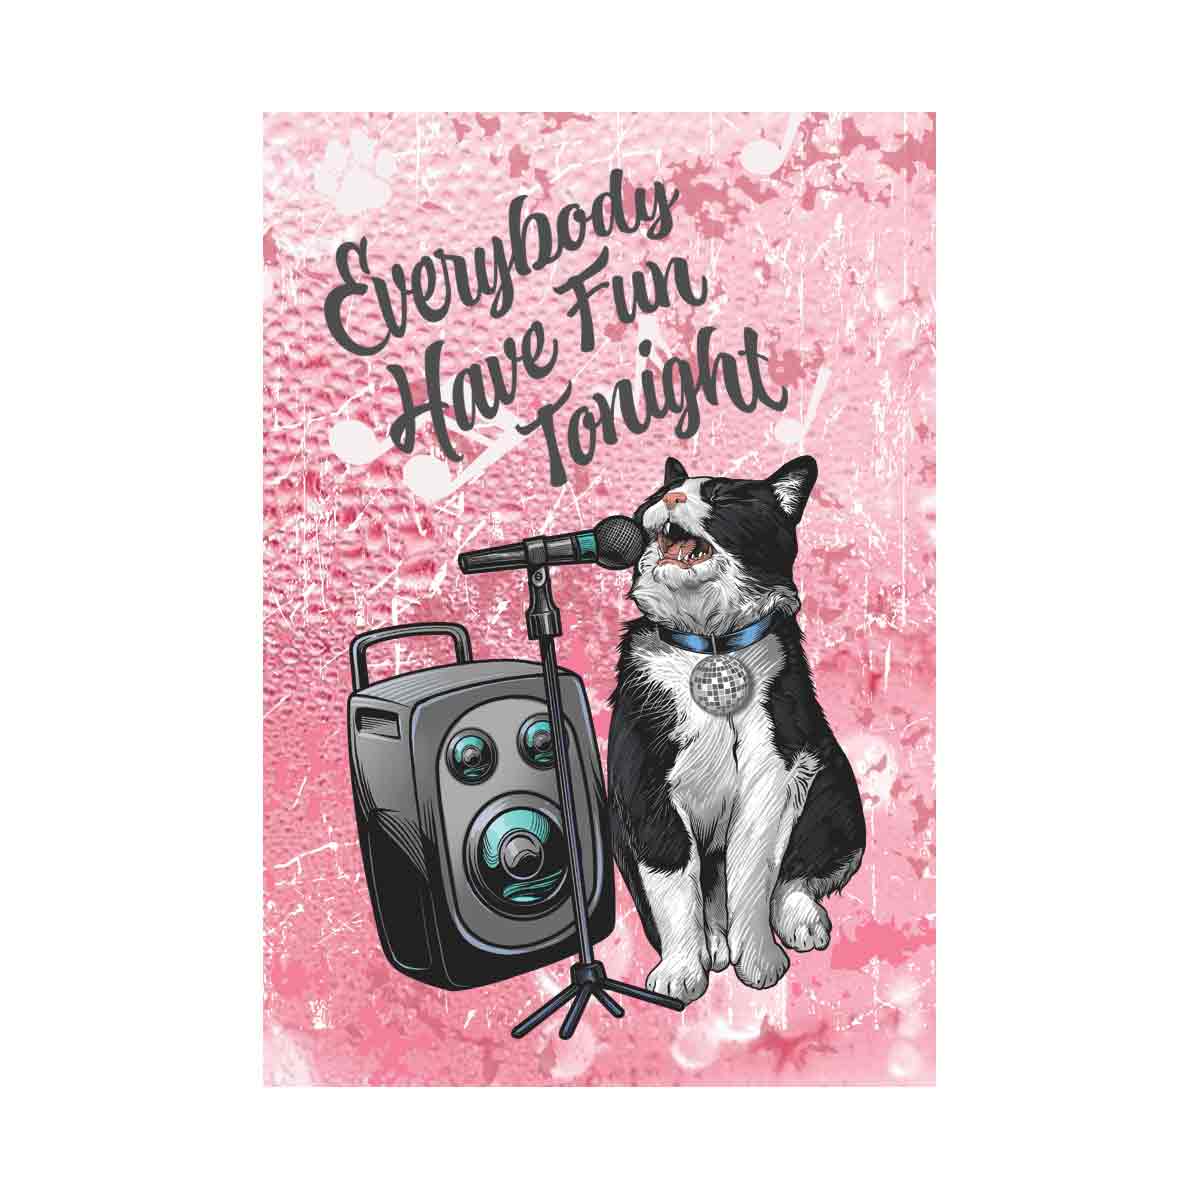 Everybody have fun tonight - cat